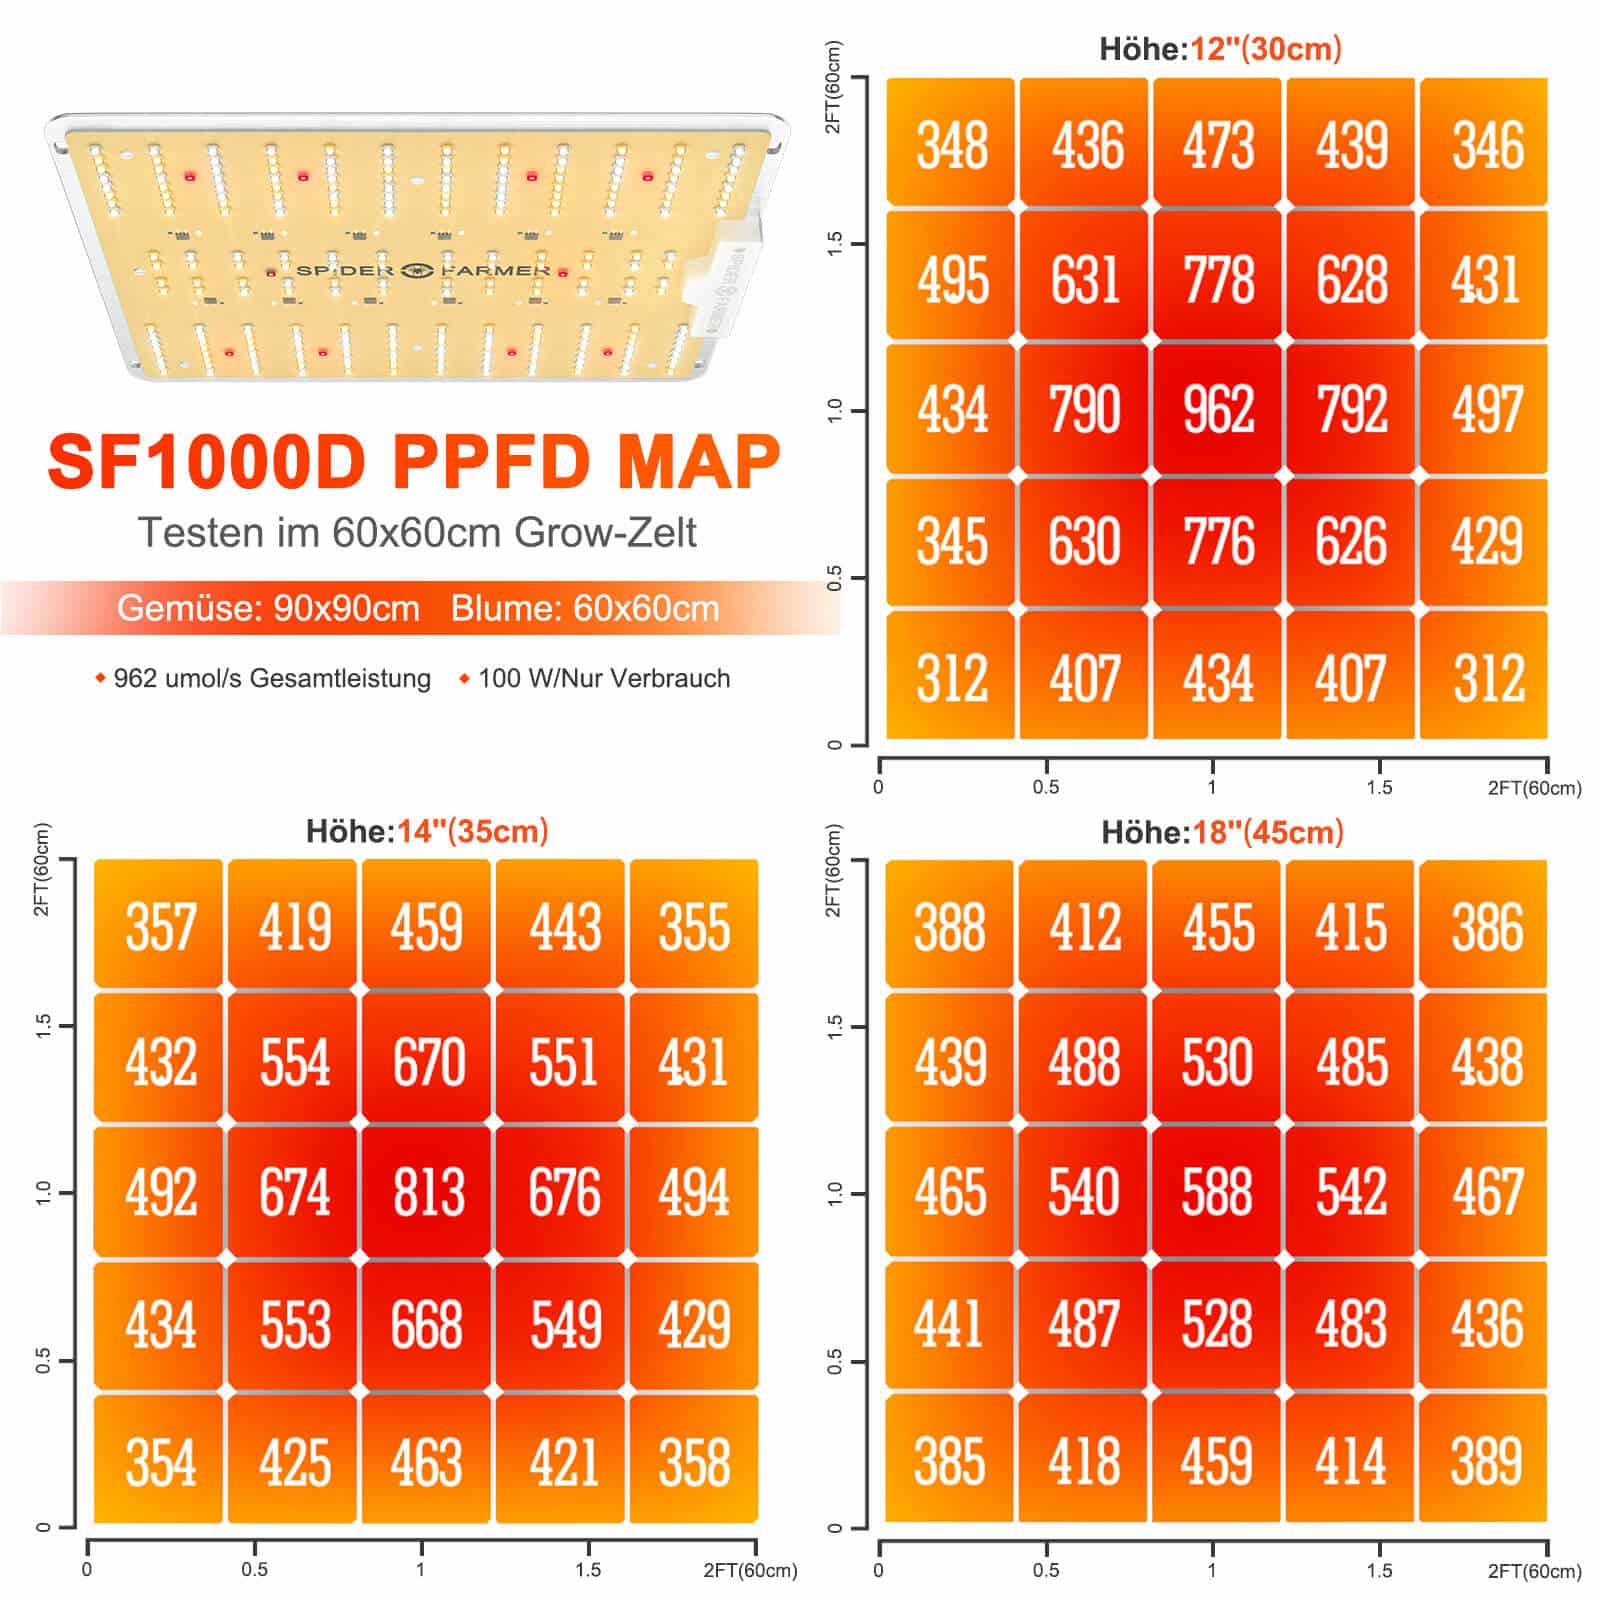 SF1000D PPFD MAP